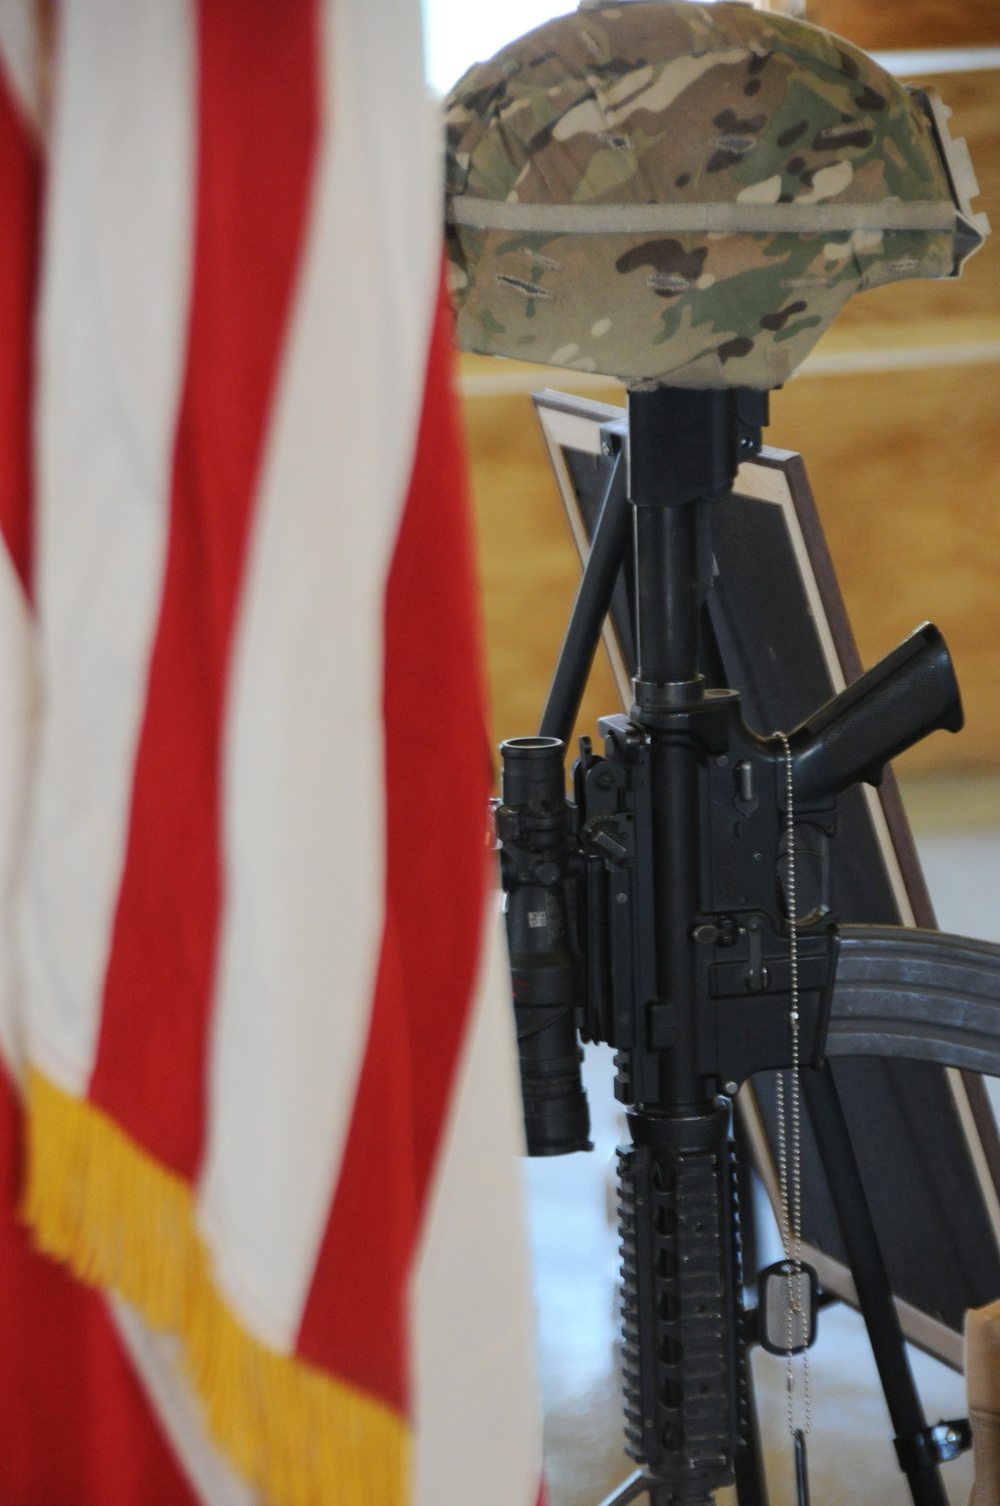 Task Force Provider honors fallen soldier in Kandahar, Afghanistan